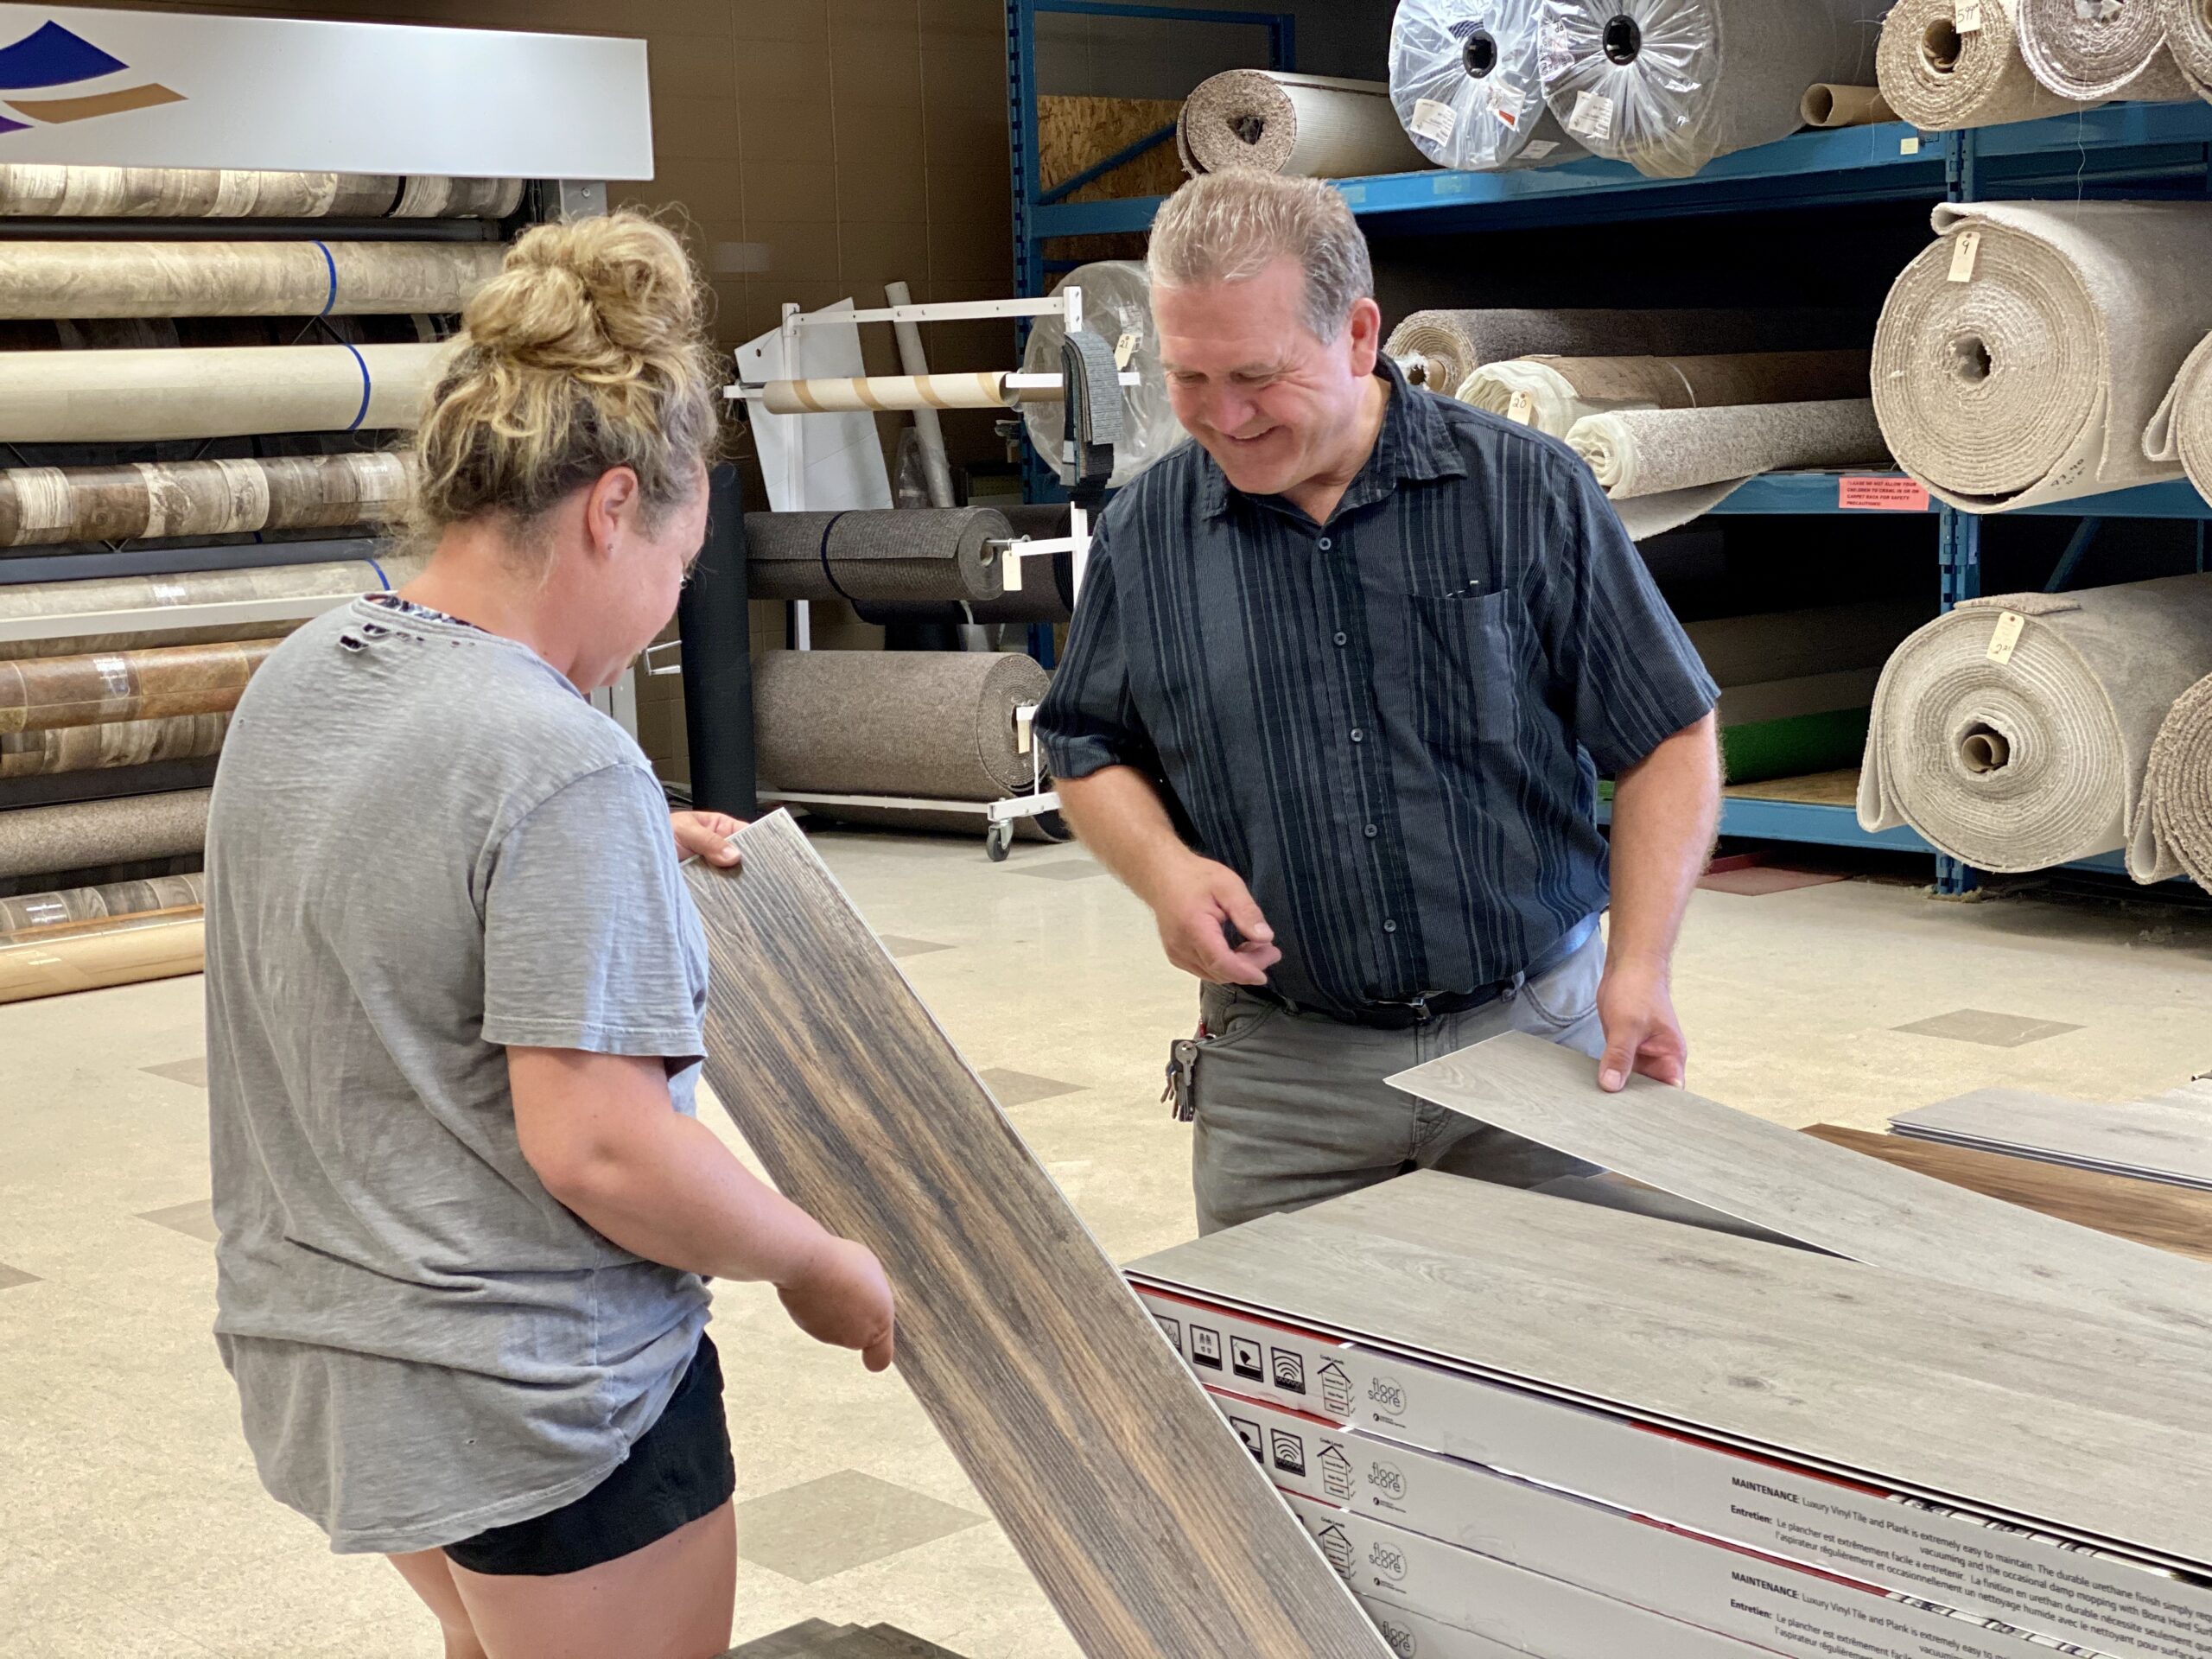 Nufloors Slave Lake associate helping Customer with laminate flooring